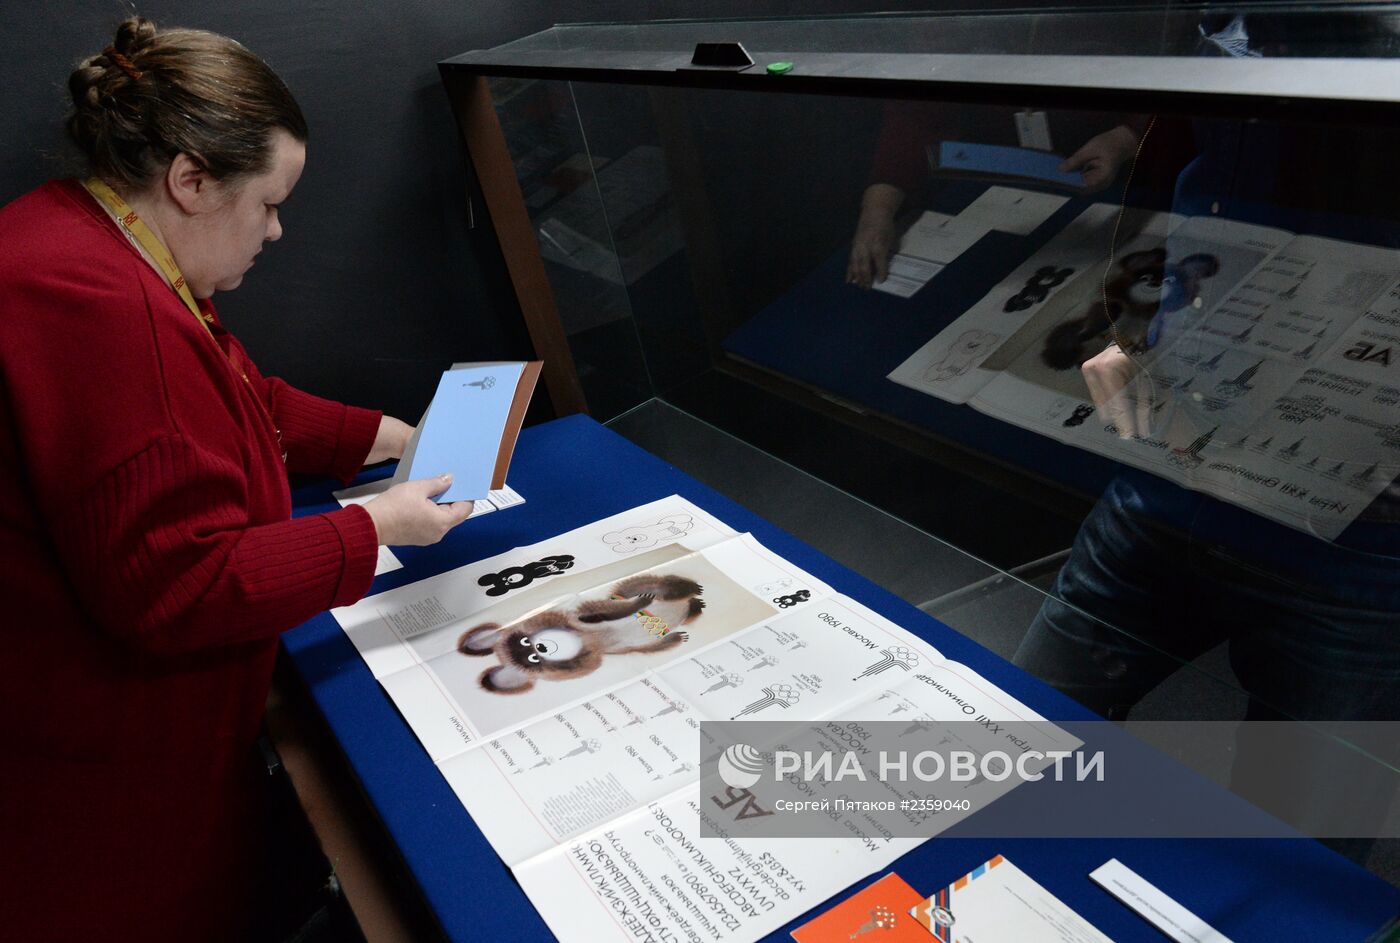 Открытие выставки "Москва и спорт"